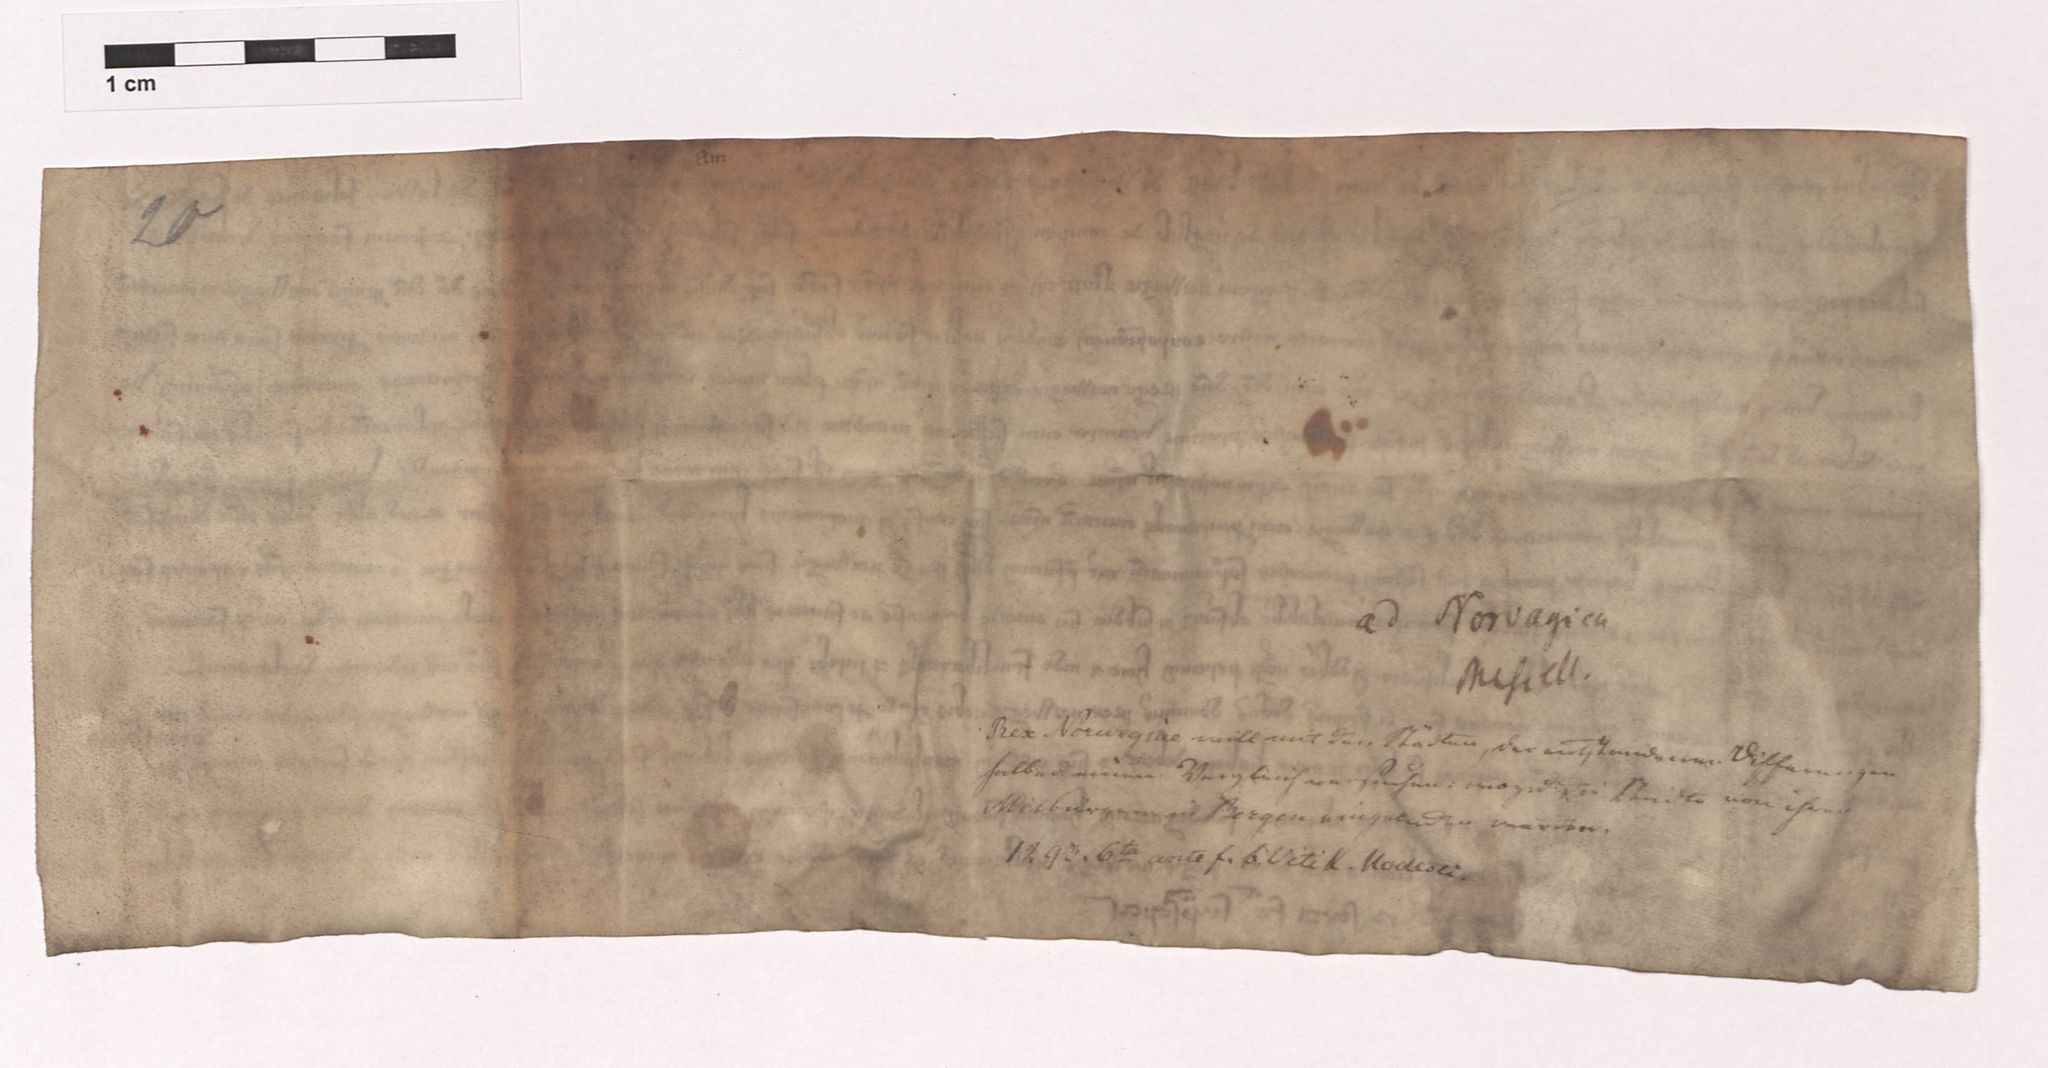 07.1 Urkunden, 3 Auswärtige Beziehungen (Externa), AHL/-/21: Norwegen (Norvagica); Kontor zu Bergen, 1247-1747, s. 178